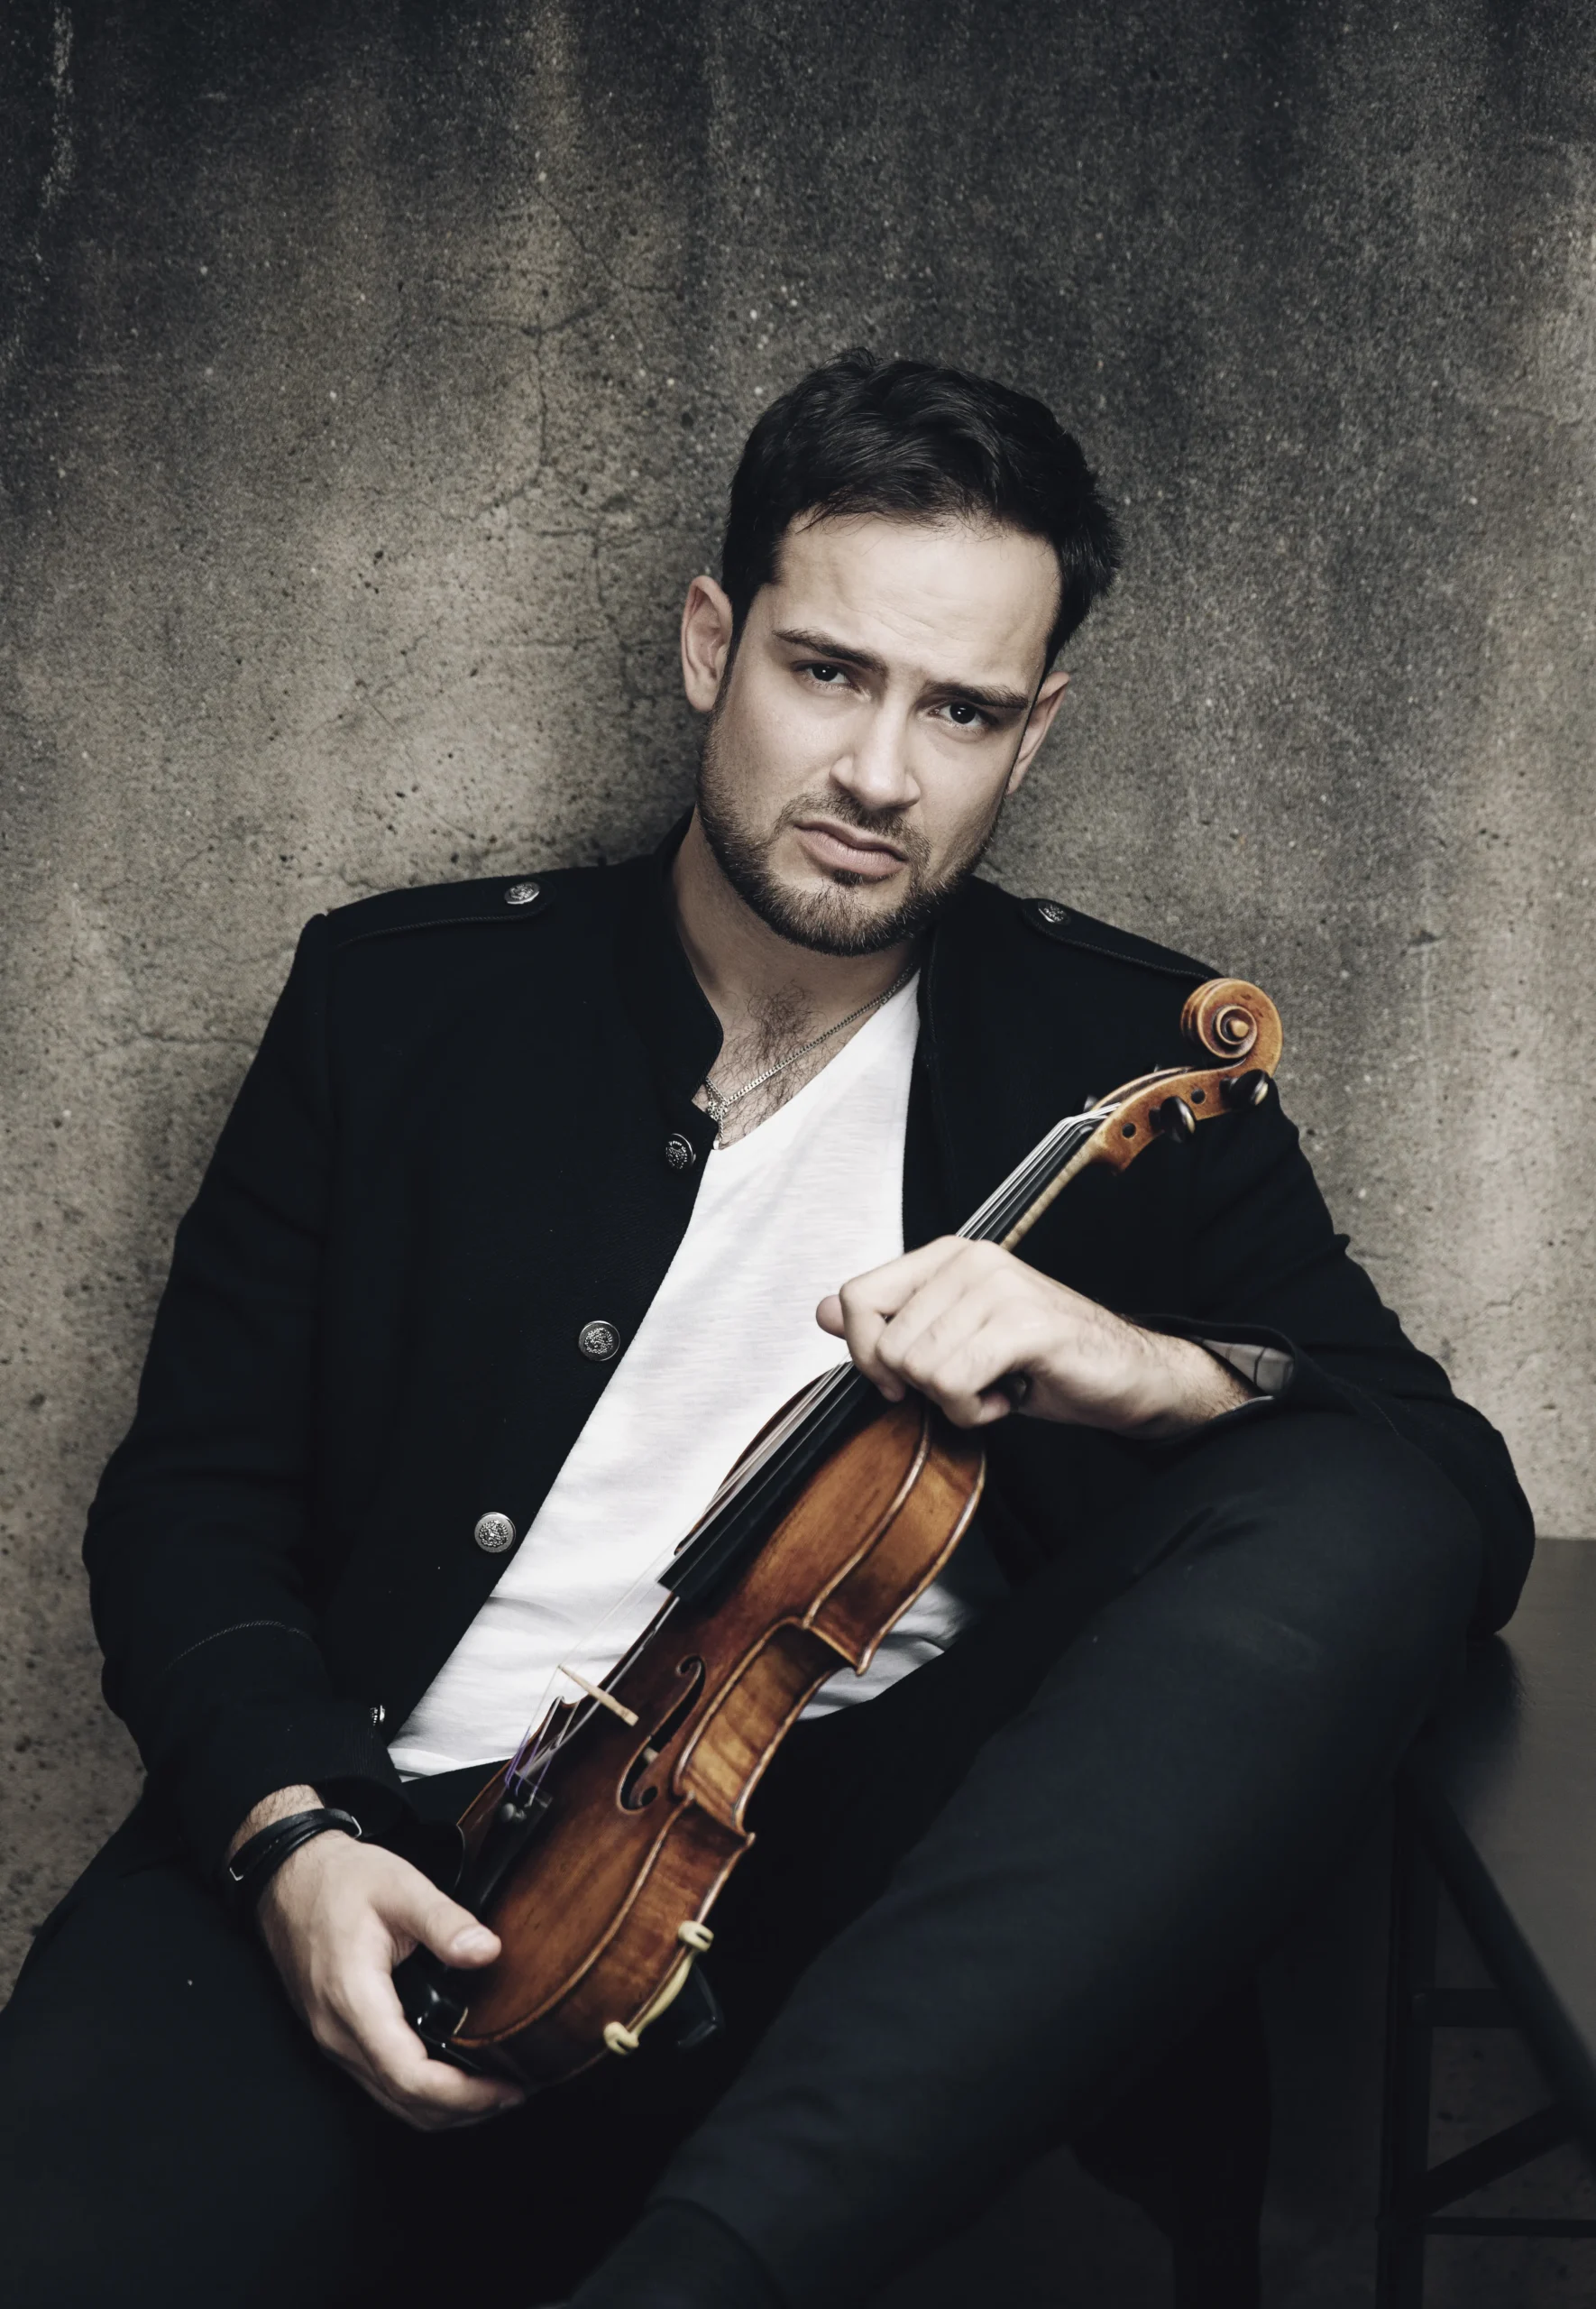 marc bouchkov violin - What violin does Marc Bouchkov play